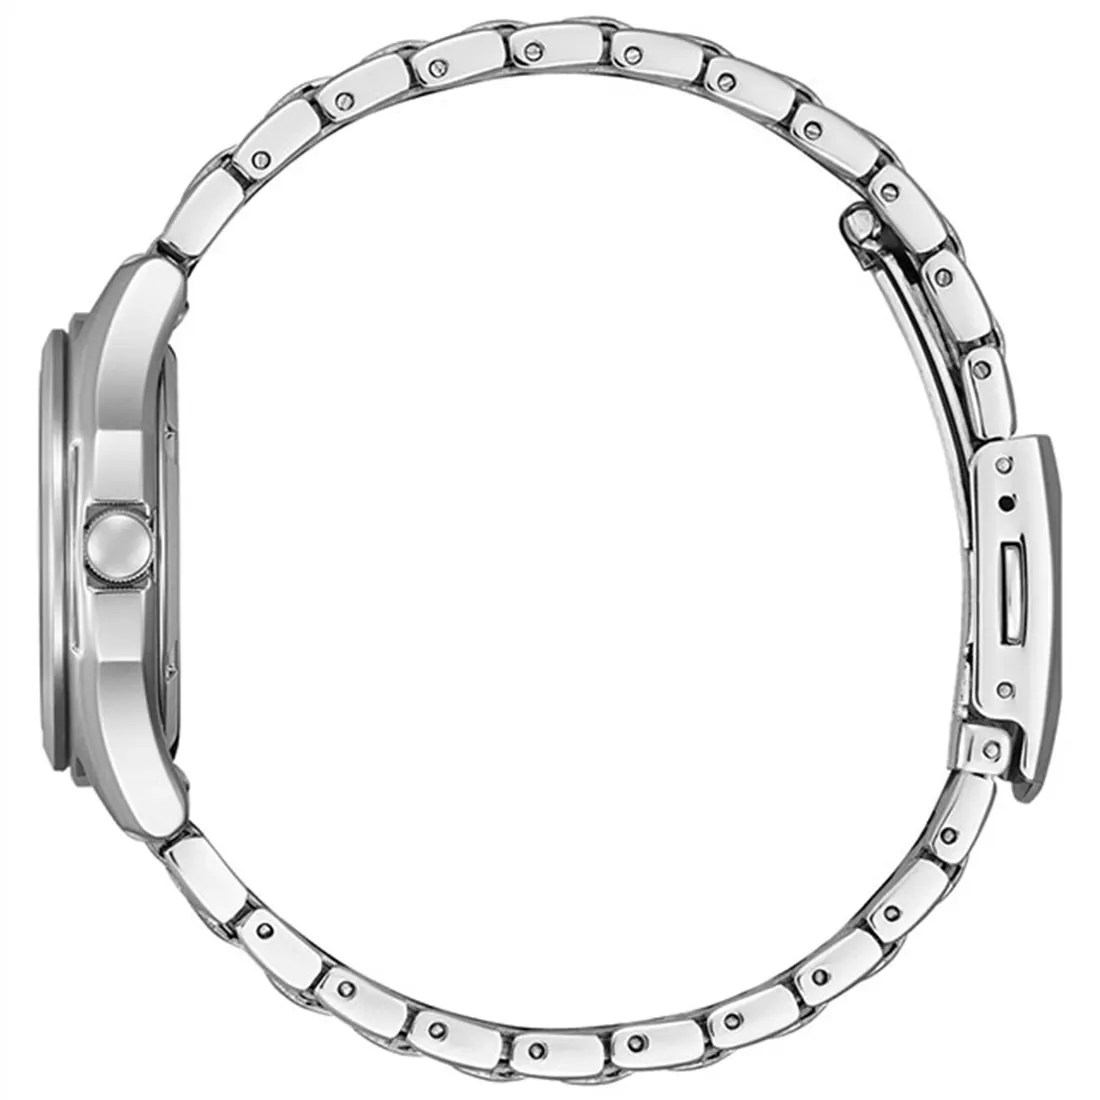 CITIZEN Eco-Drive Stainless Steel Bracelet FE2110-81A